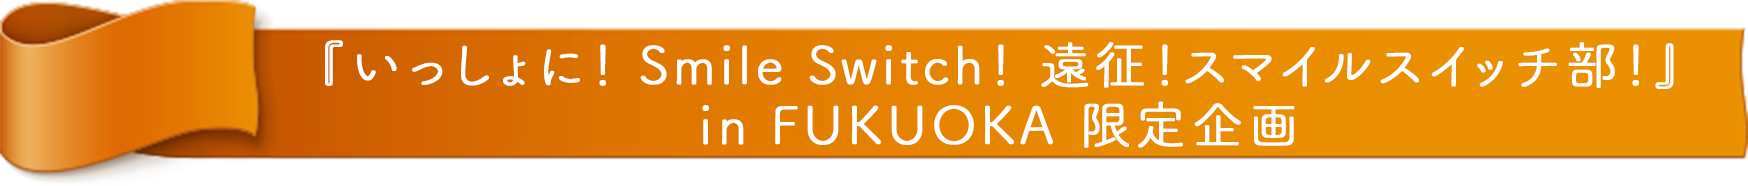 『FUJIYA いっしょに！ Smile Switch！ 遠征！スマイルスイッチ部！ in FUKUOKA』 限定企画